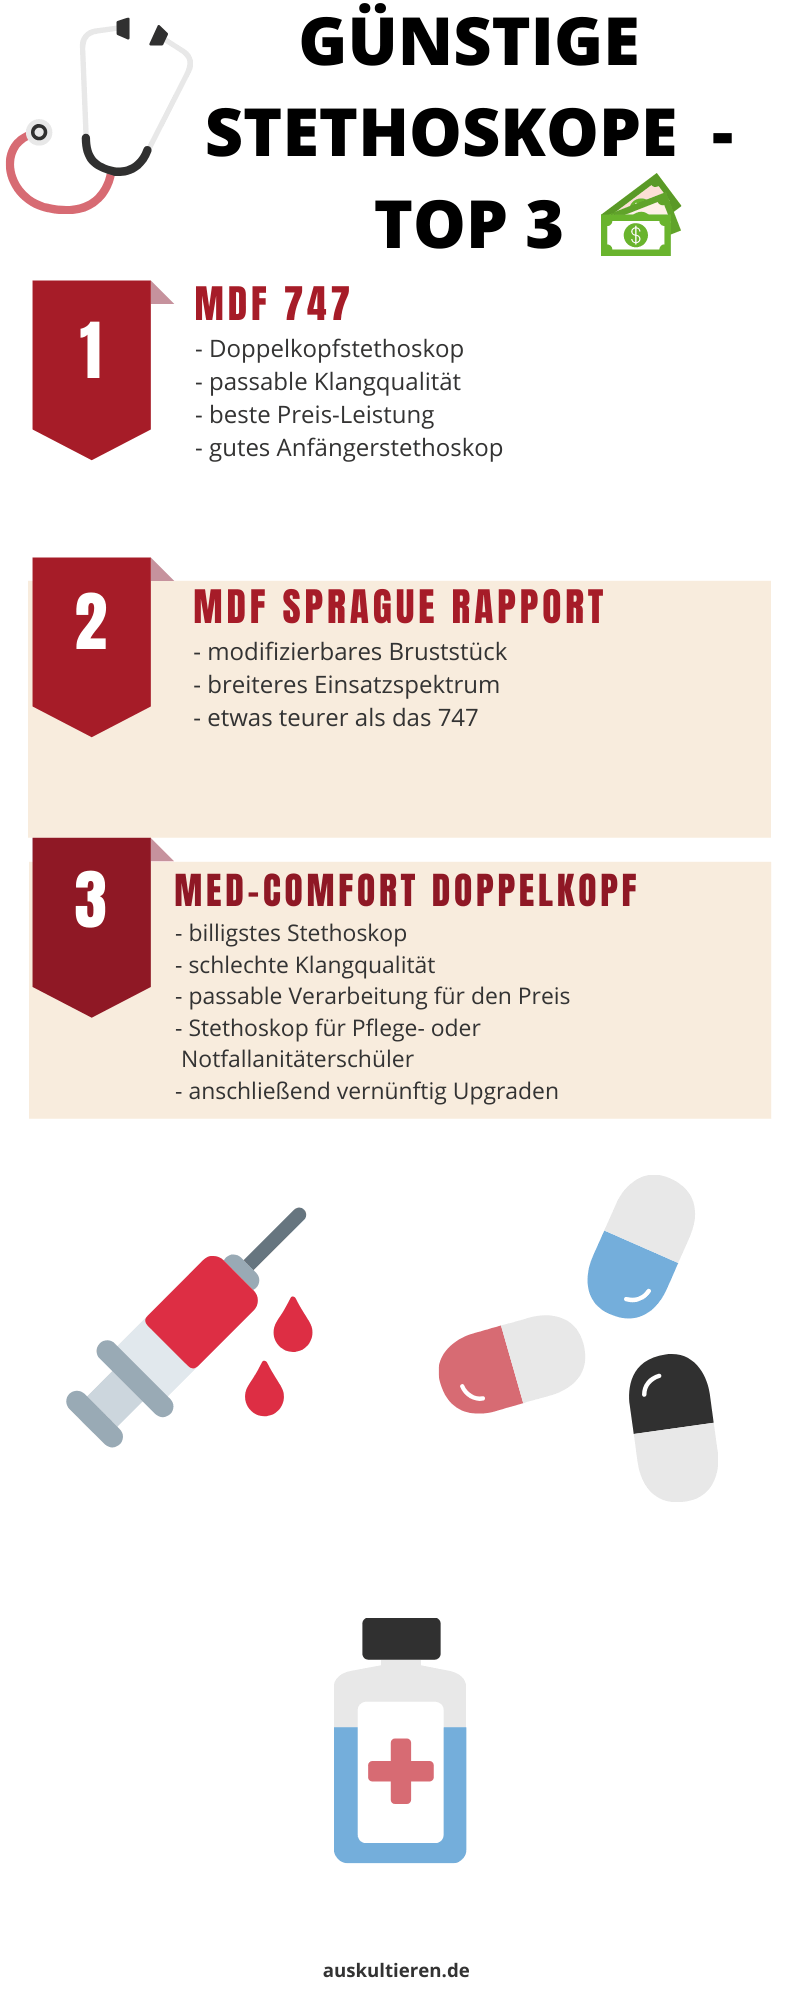 Top 3 günstige Stethoskope Infografik